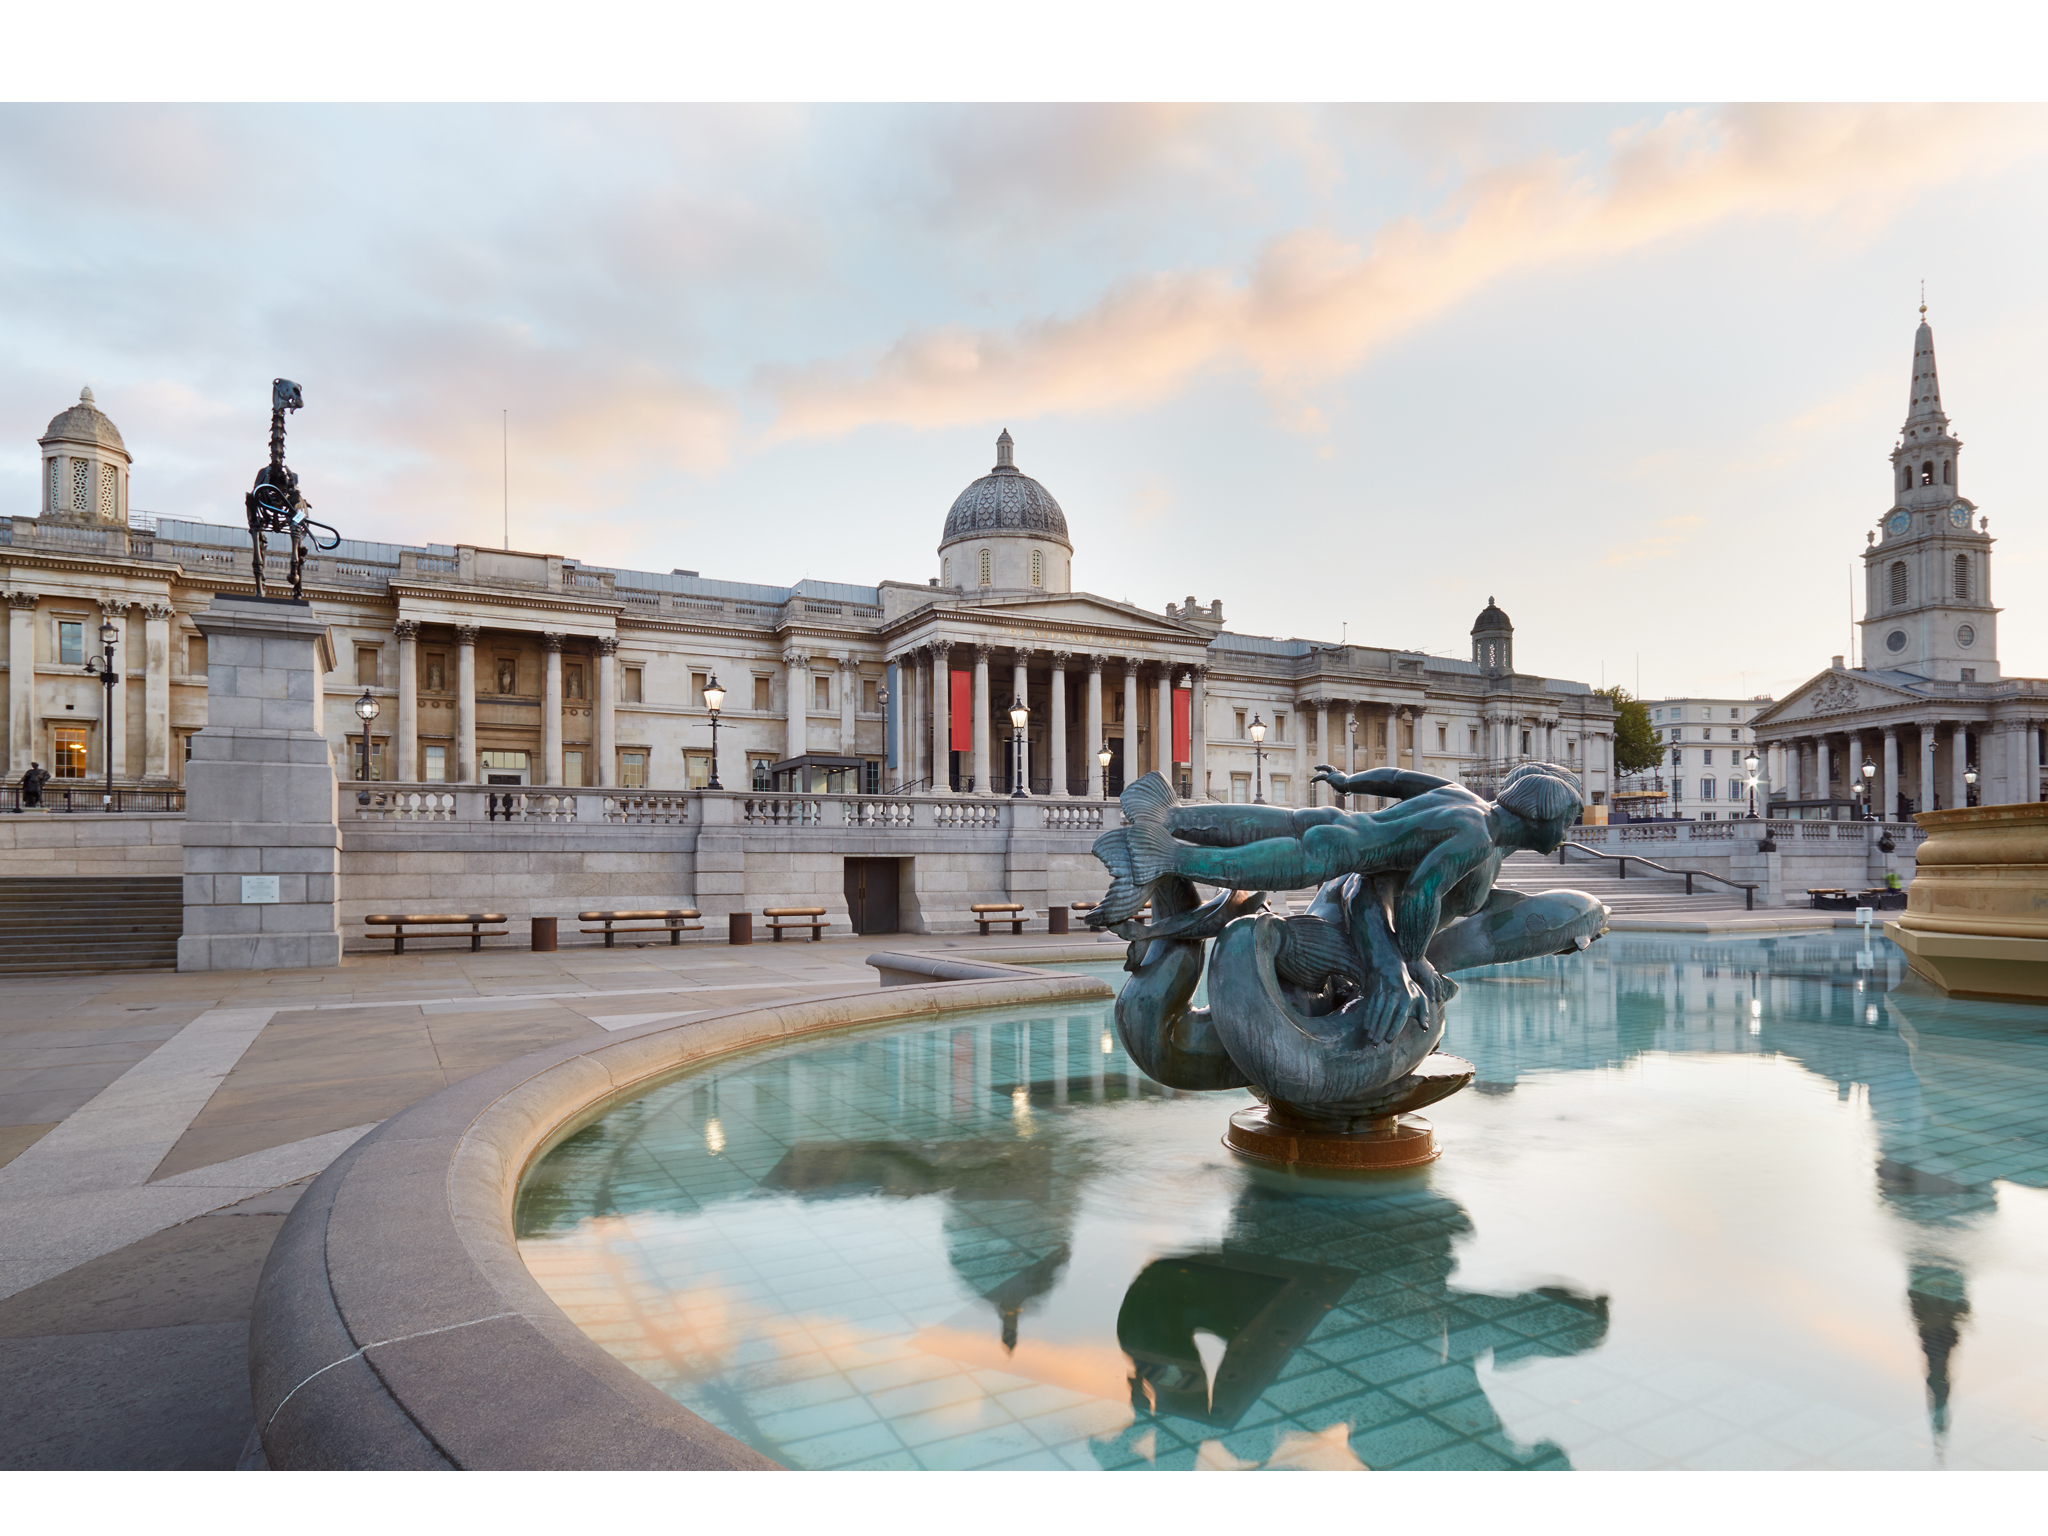 National Gallery | Art in Trafalgar Square, London